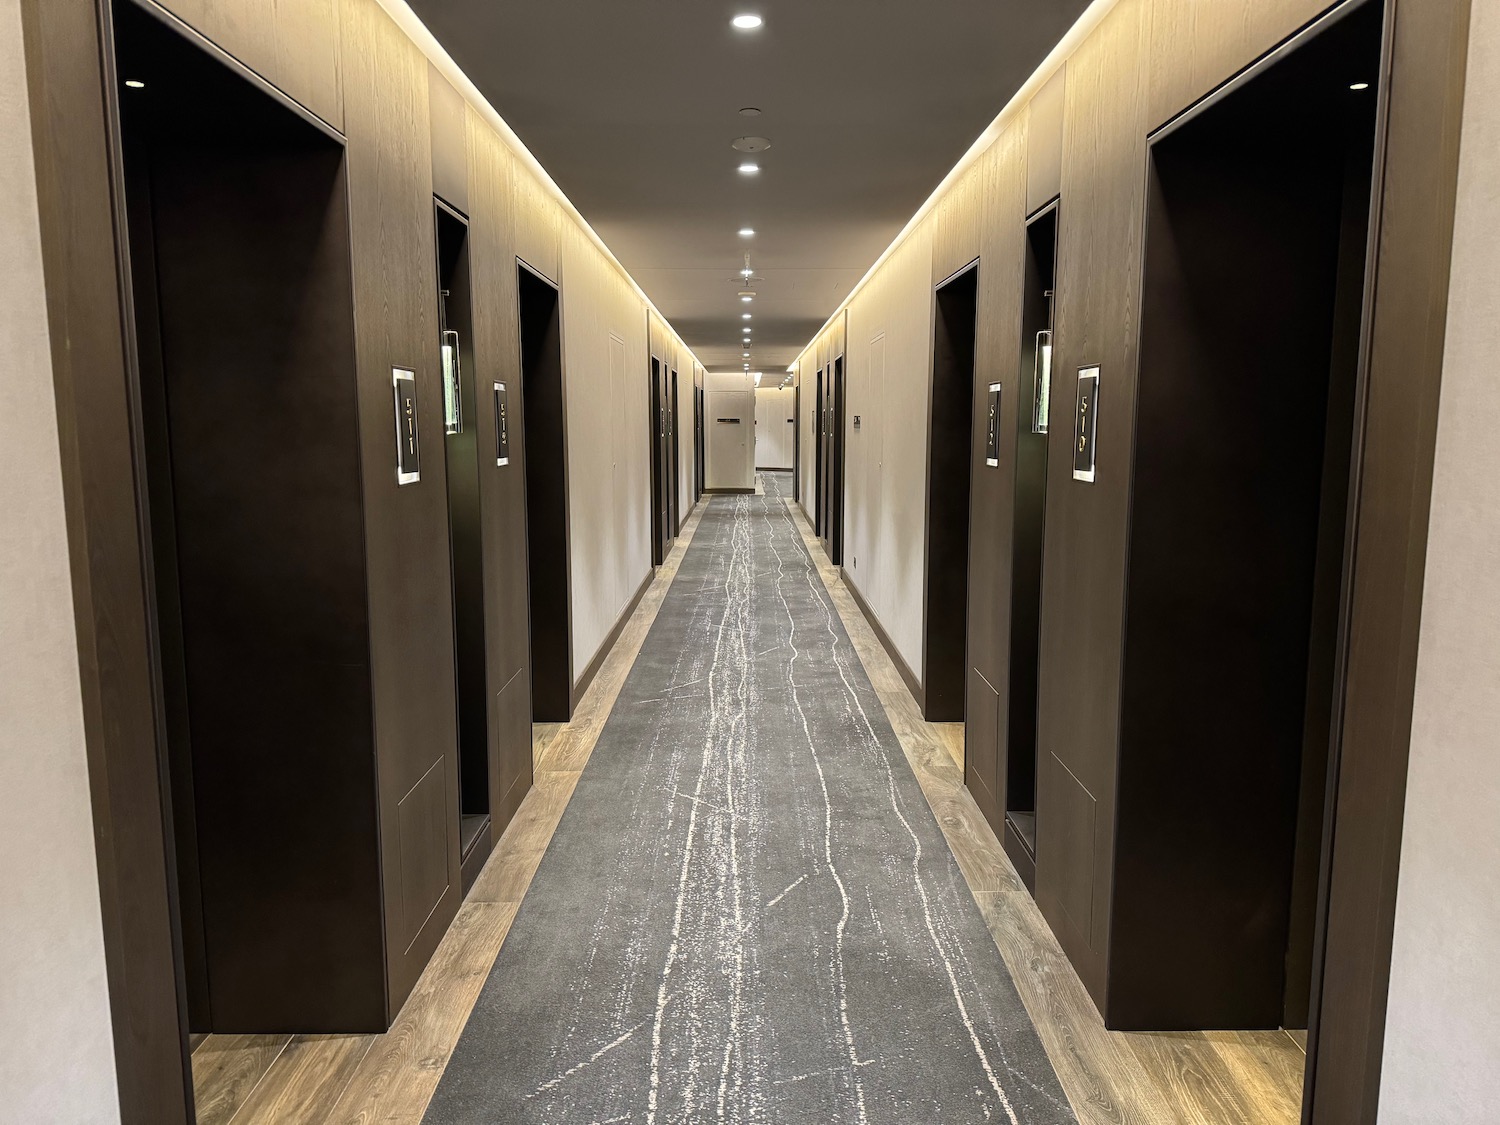 a hallway with many doors